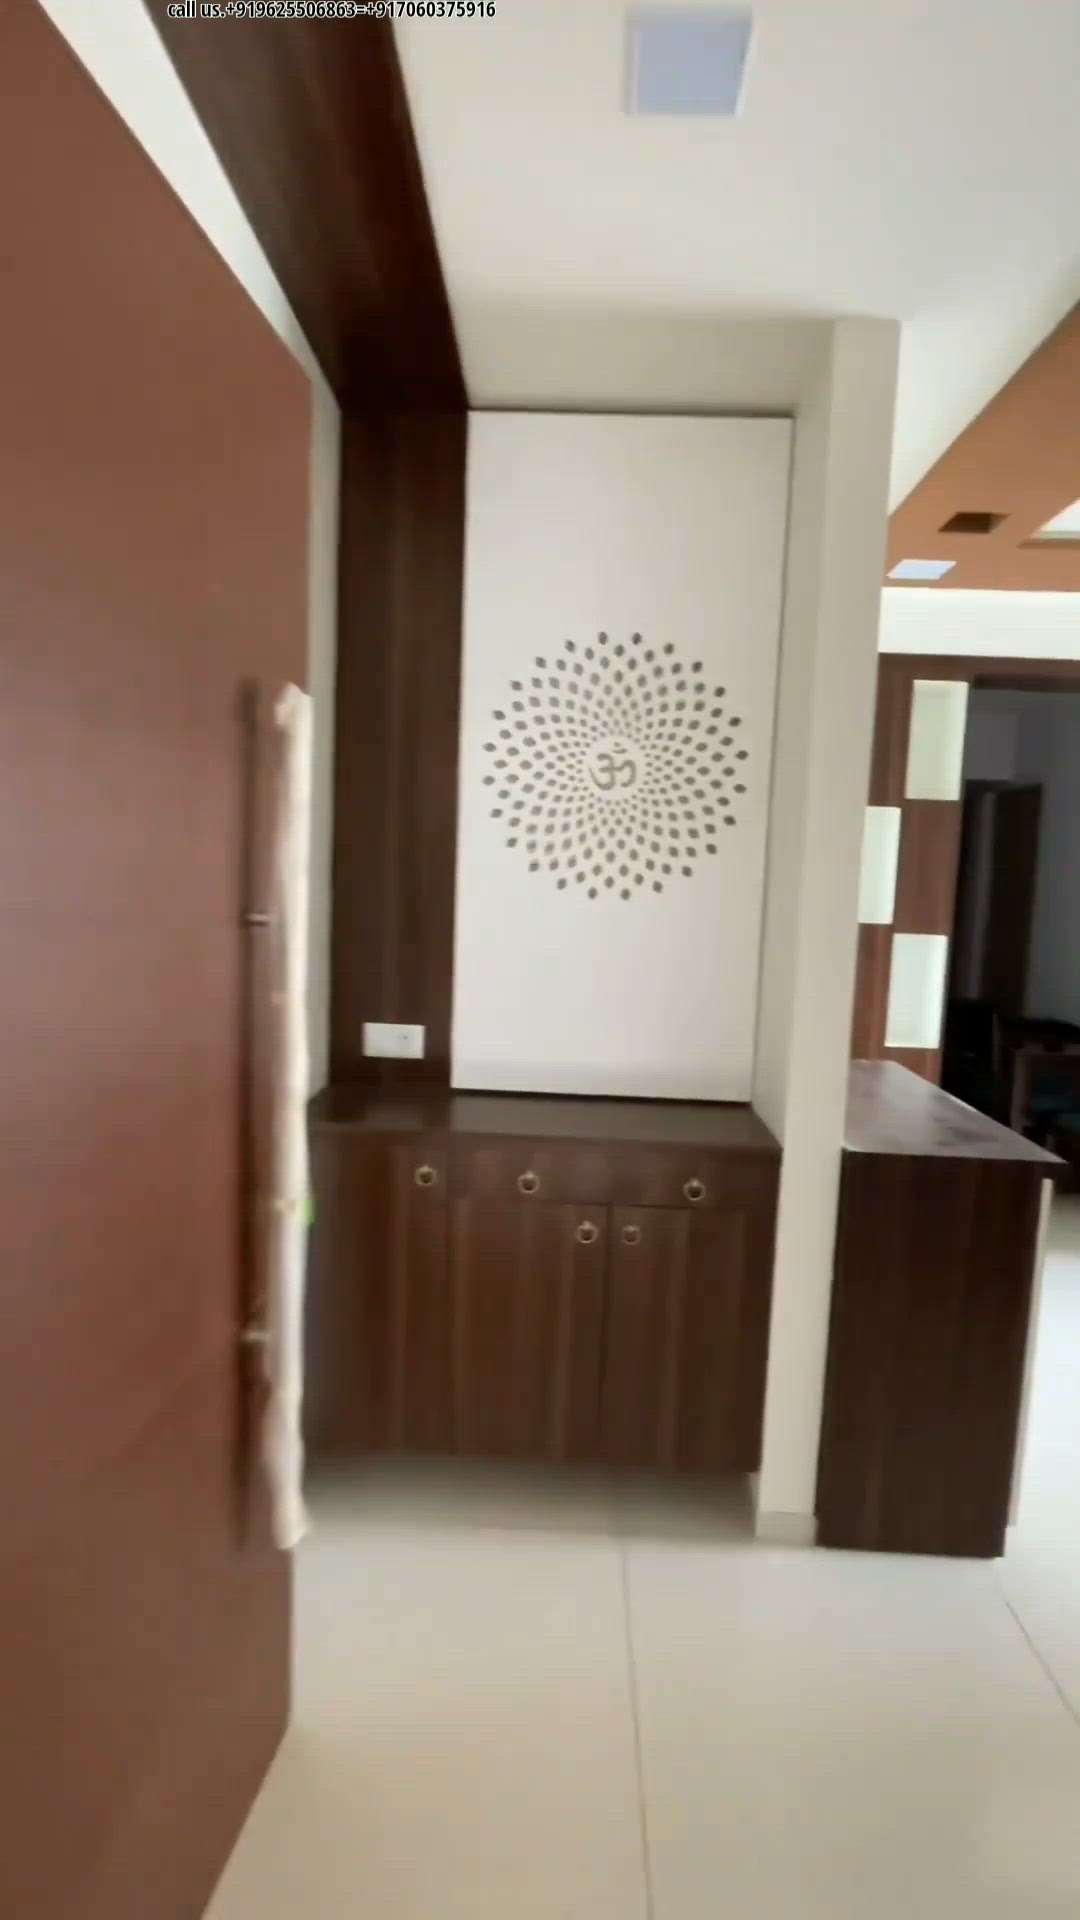 #LCDpanel  #TVStand  #HomeDecor  #InteriorDesigner  #furnitures work karne ke liye contact kare
whats.+919625506863
call.+919625506866
Saquib Mirza